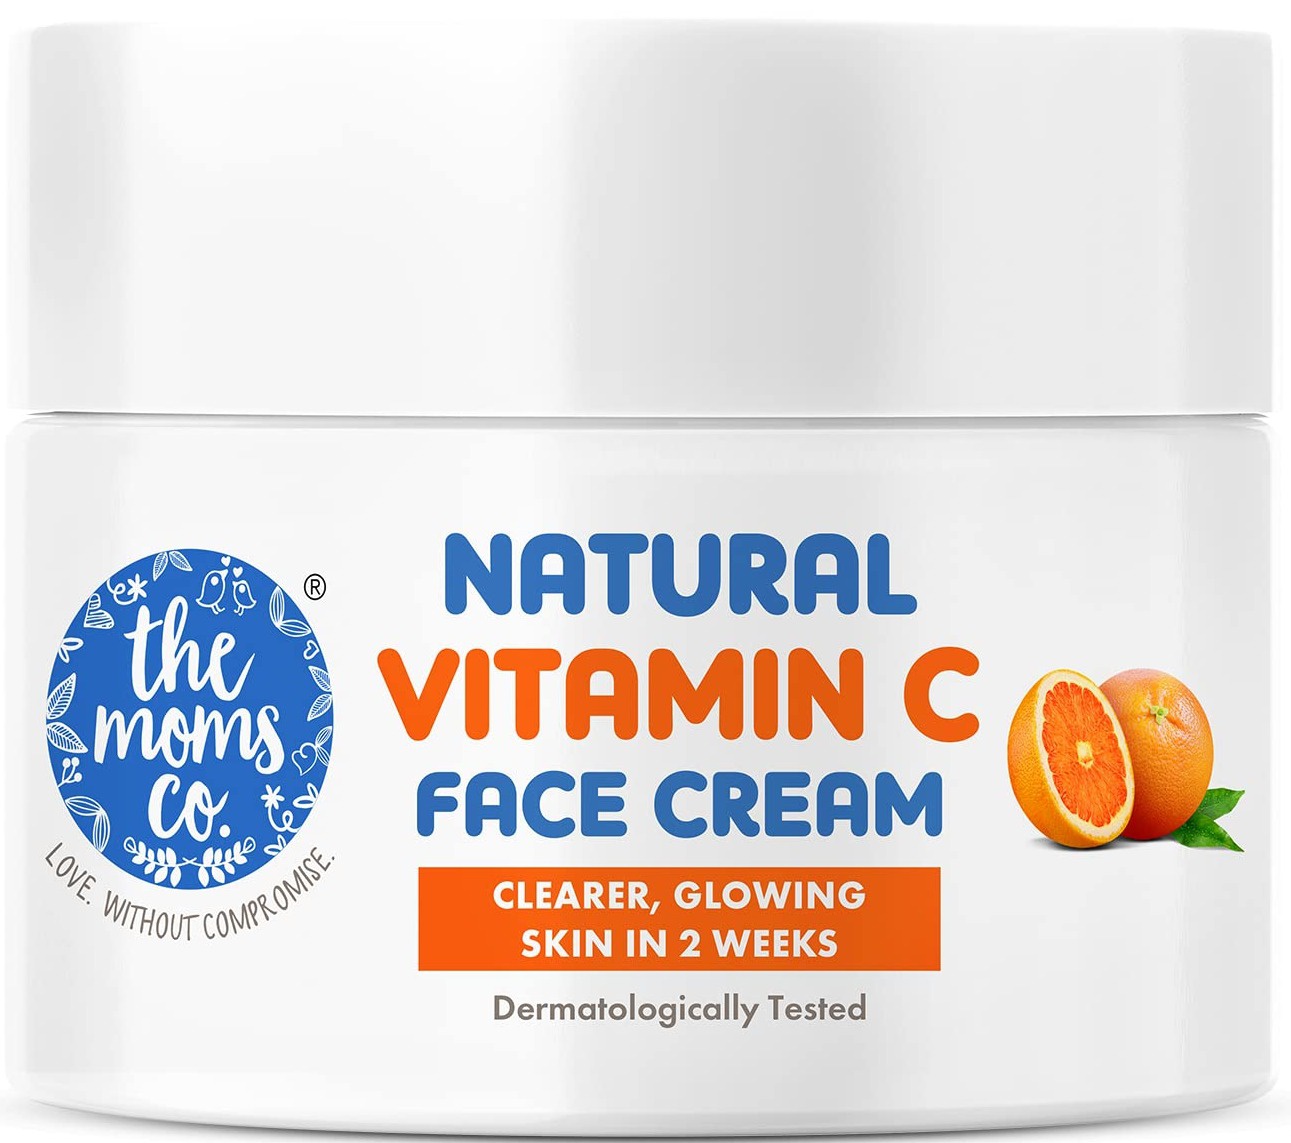 The Mom's Co. Natural Vitamin C Face Cream